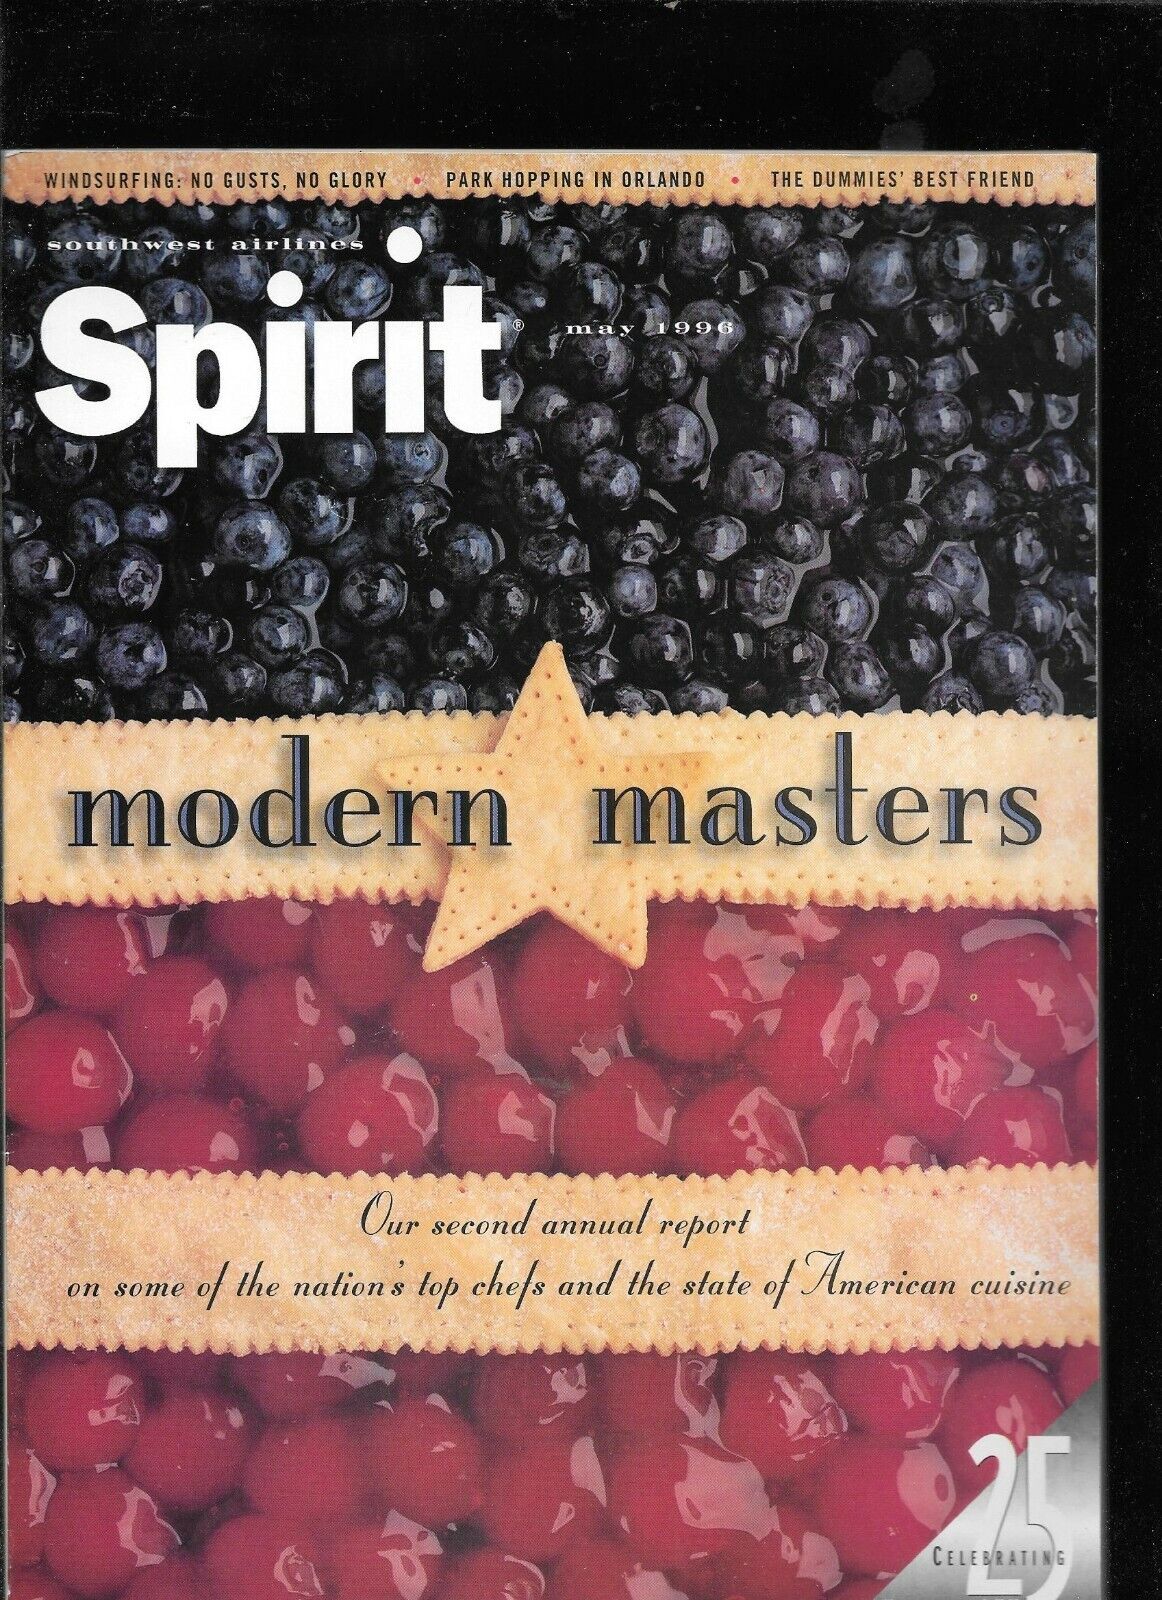 Vintage Southwest Airline 1996 Spirit In Flight Magazine May 25th Anniversary